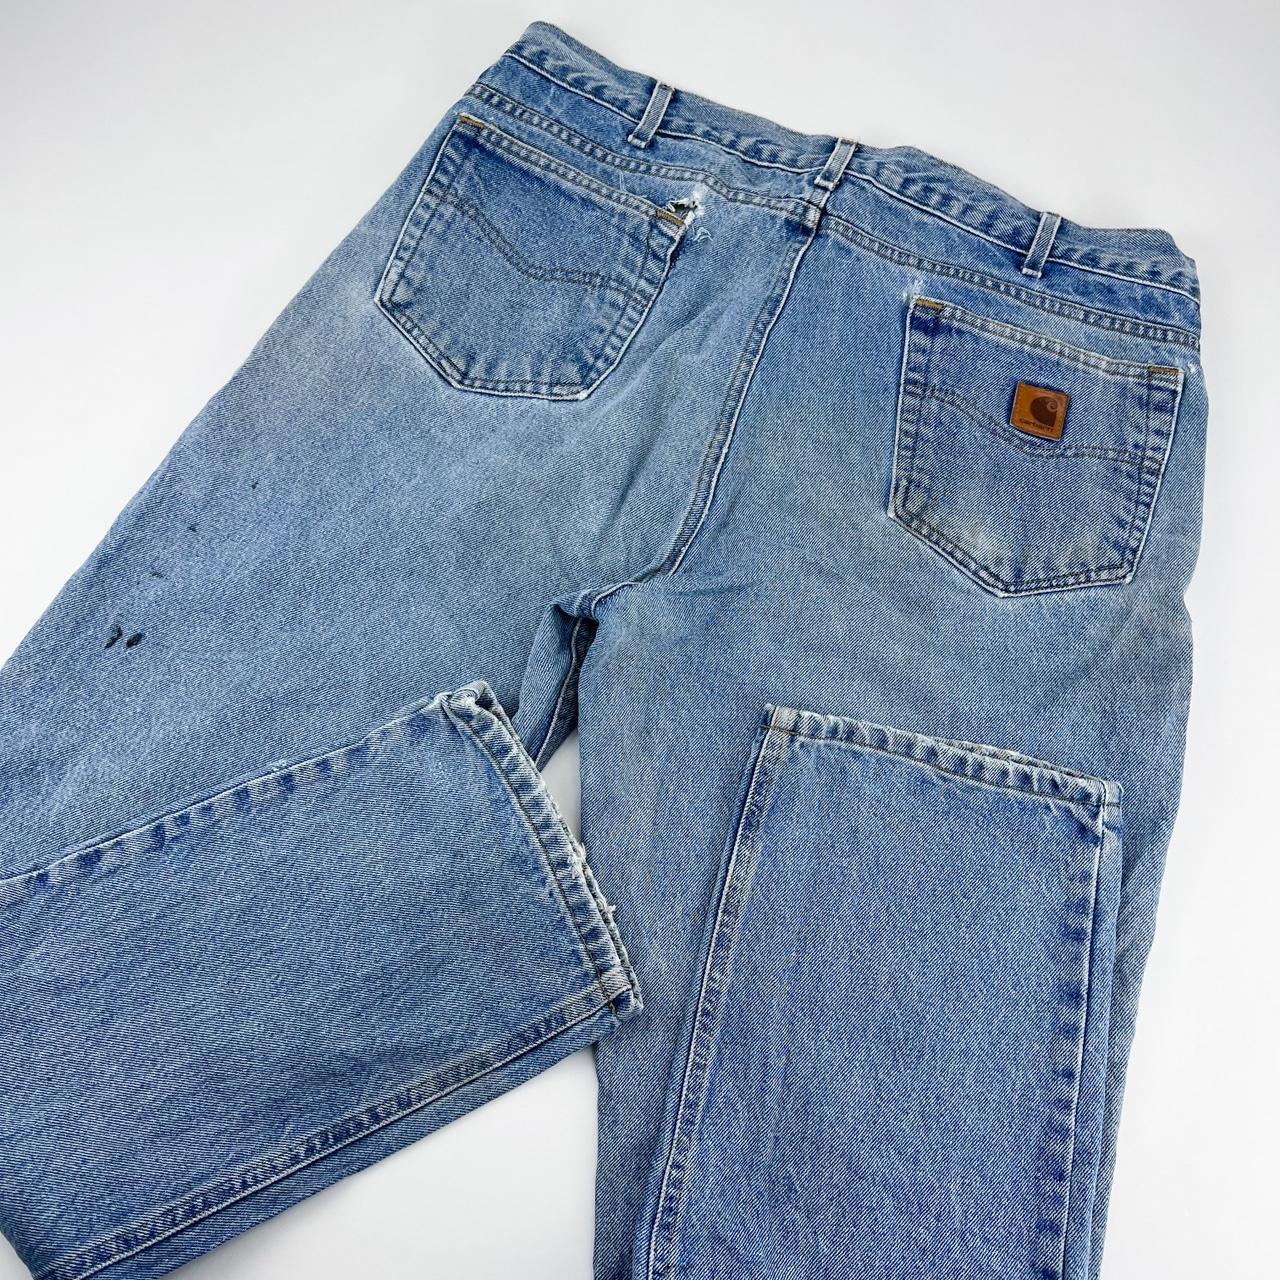 Vintage Carhartt Jeans B18 DST blue colourway,... - Depop